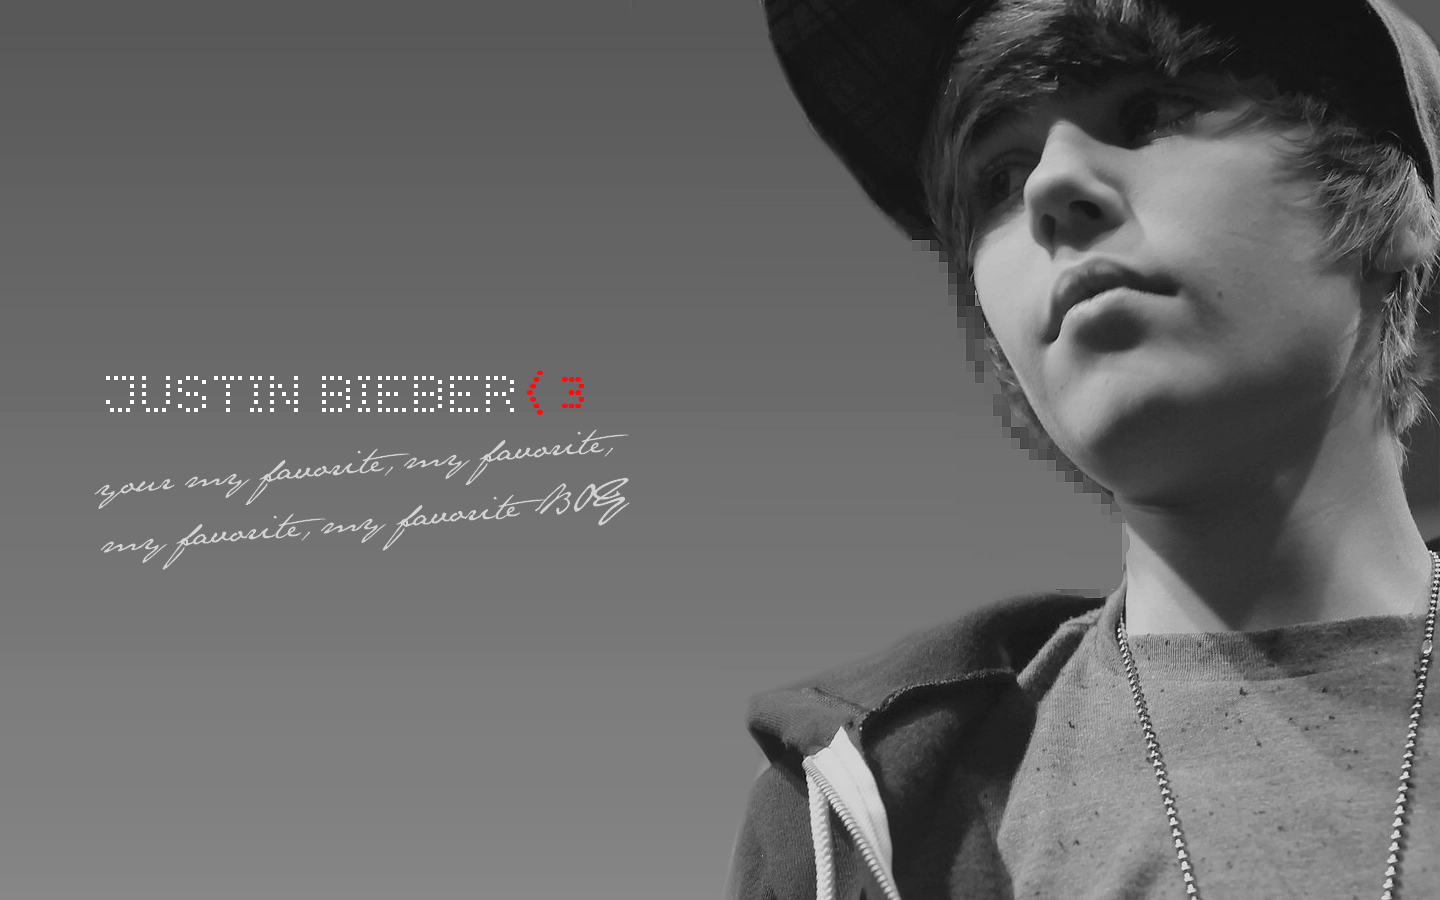 Wallpaper Of the month: Justin Bieber Wallpaper